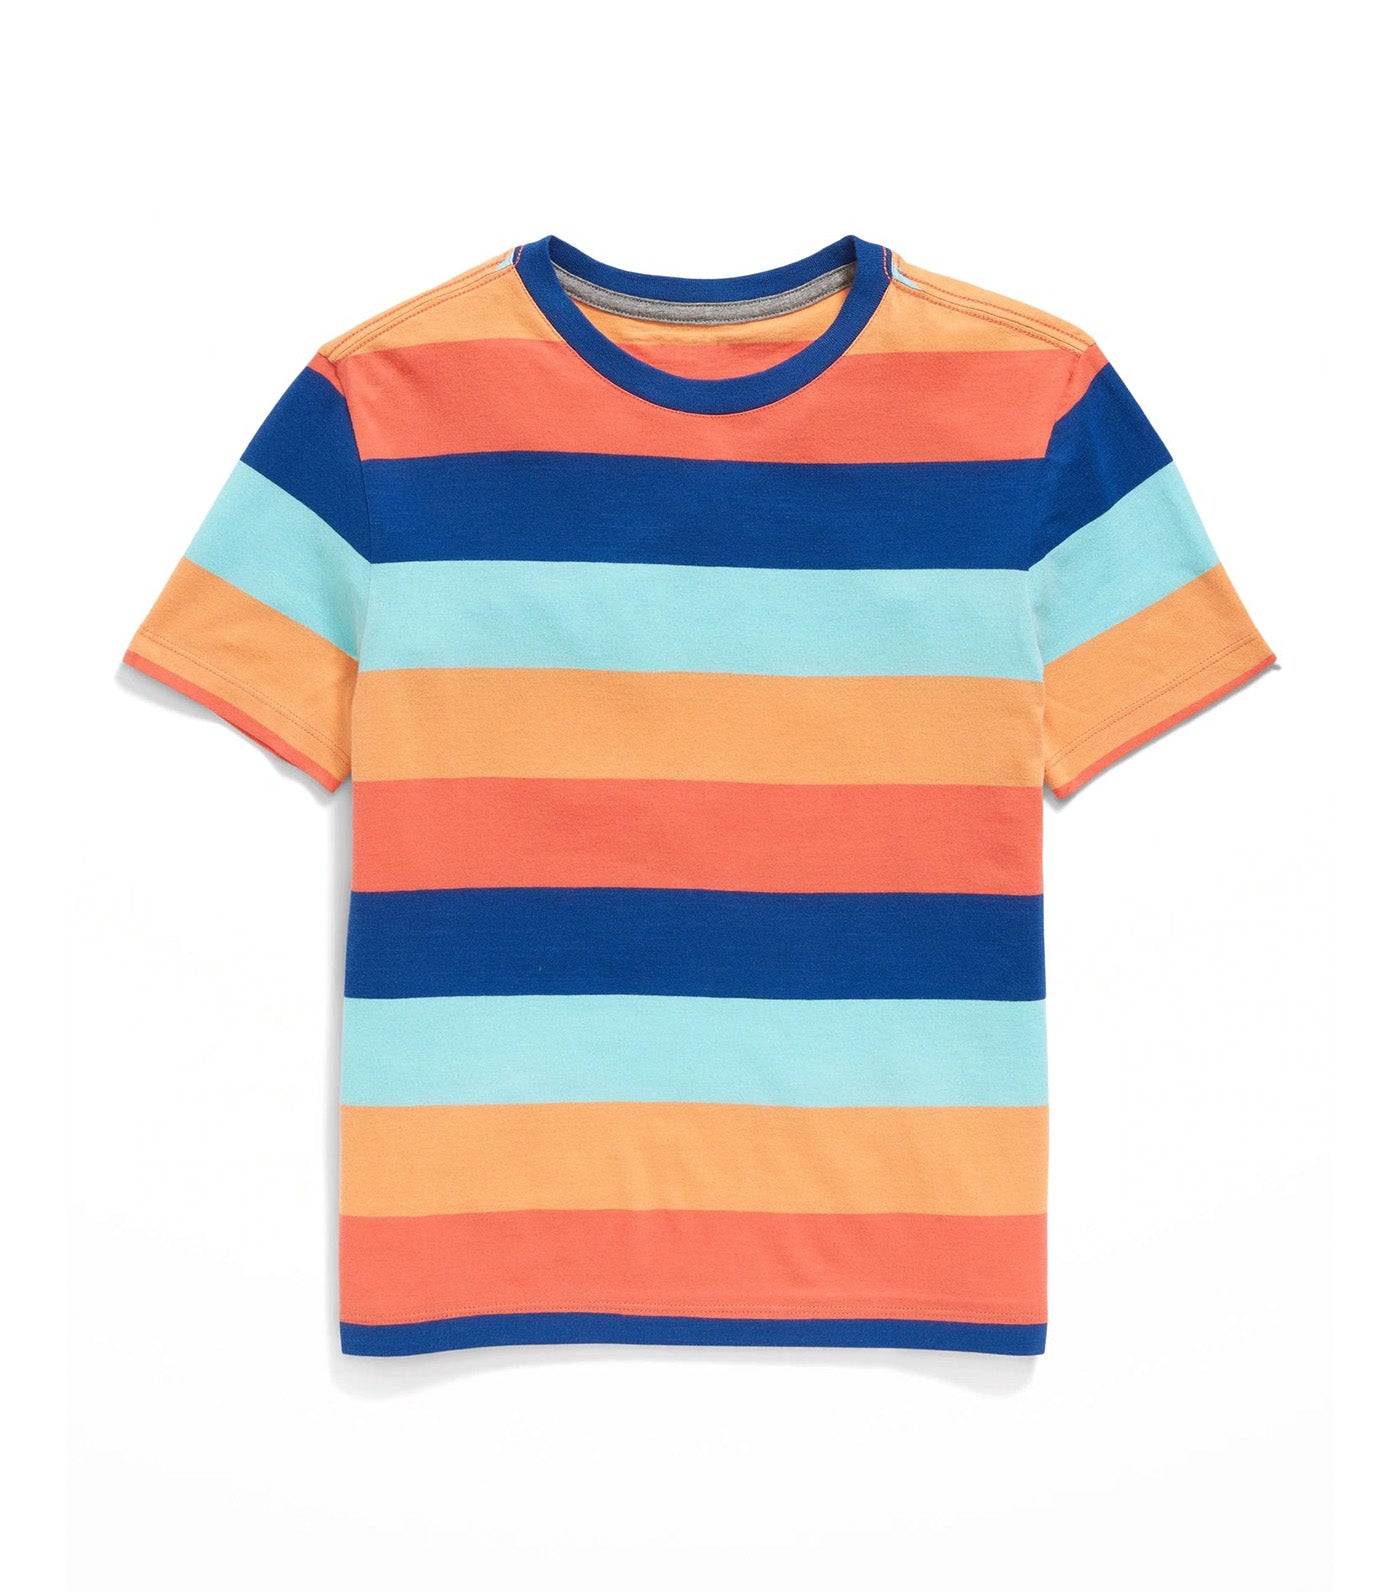 Softest Short-Sleeve Striped T-Shirt for Boys - Multi Stripe